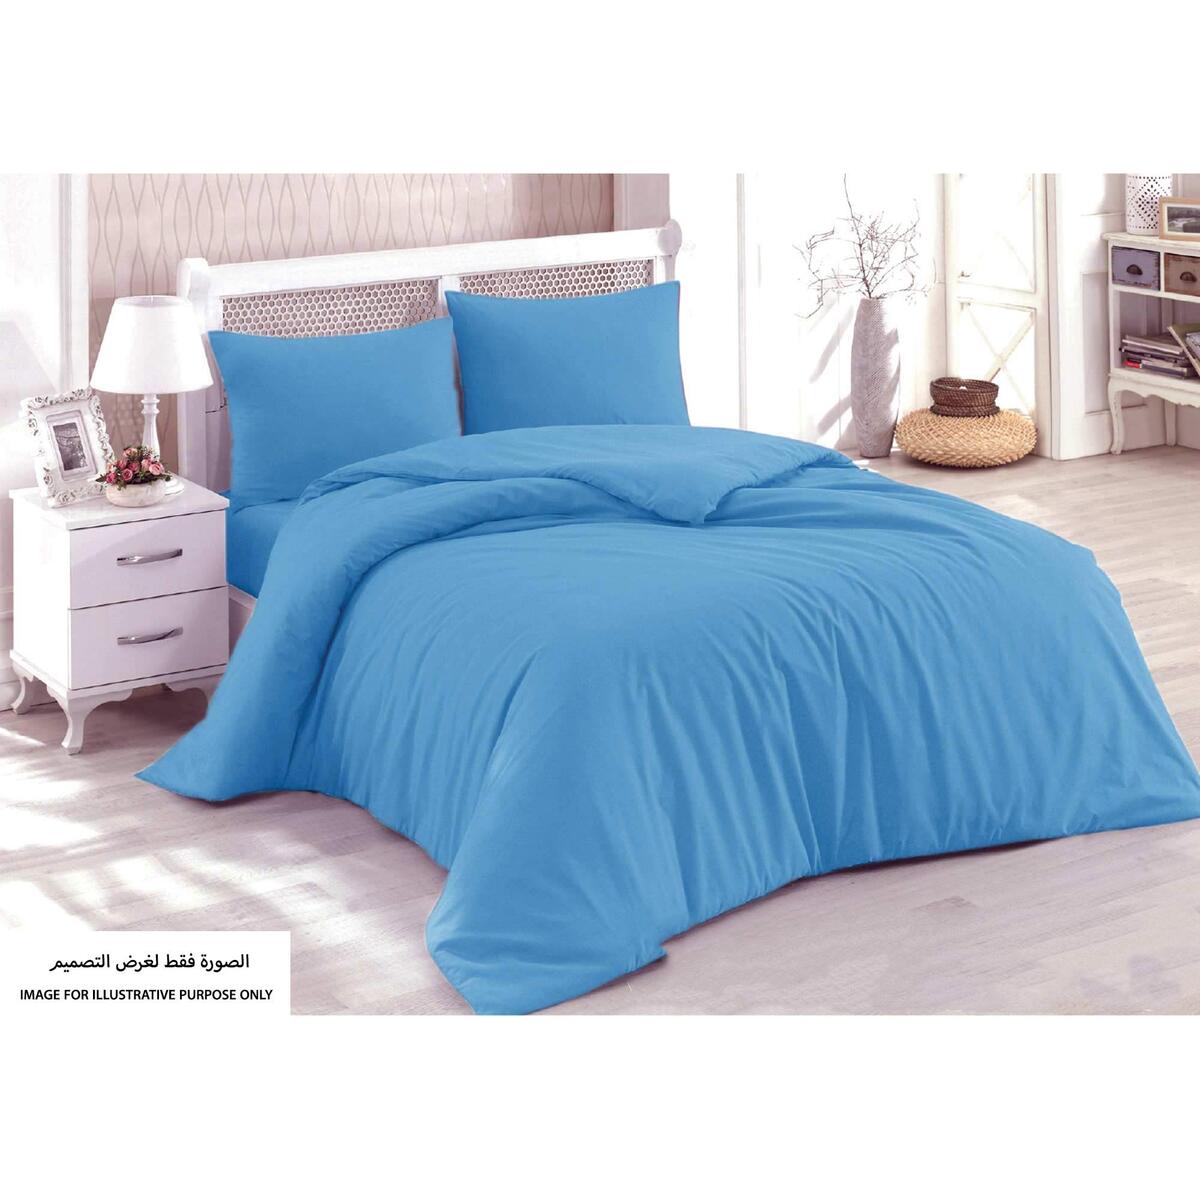 Homewell Bed Sheet Single 2 pc Set Blue